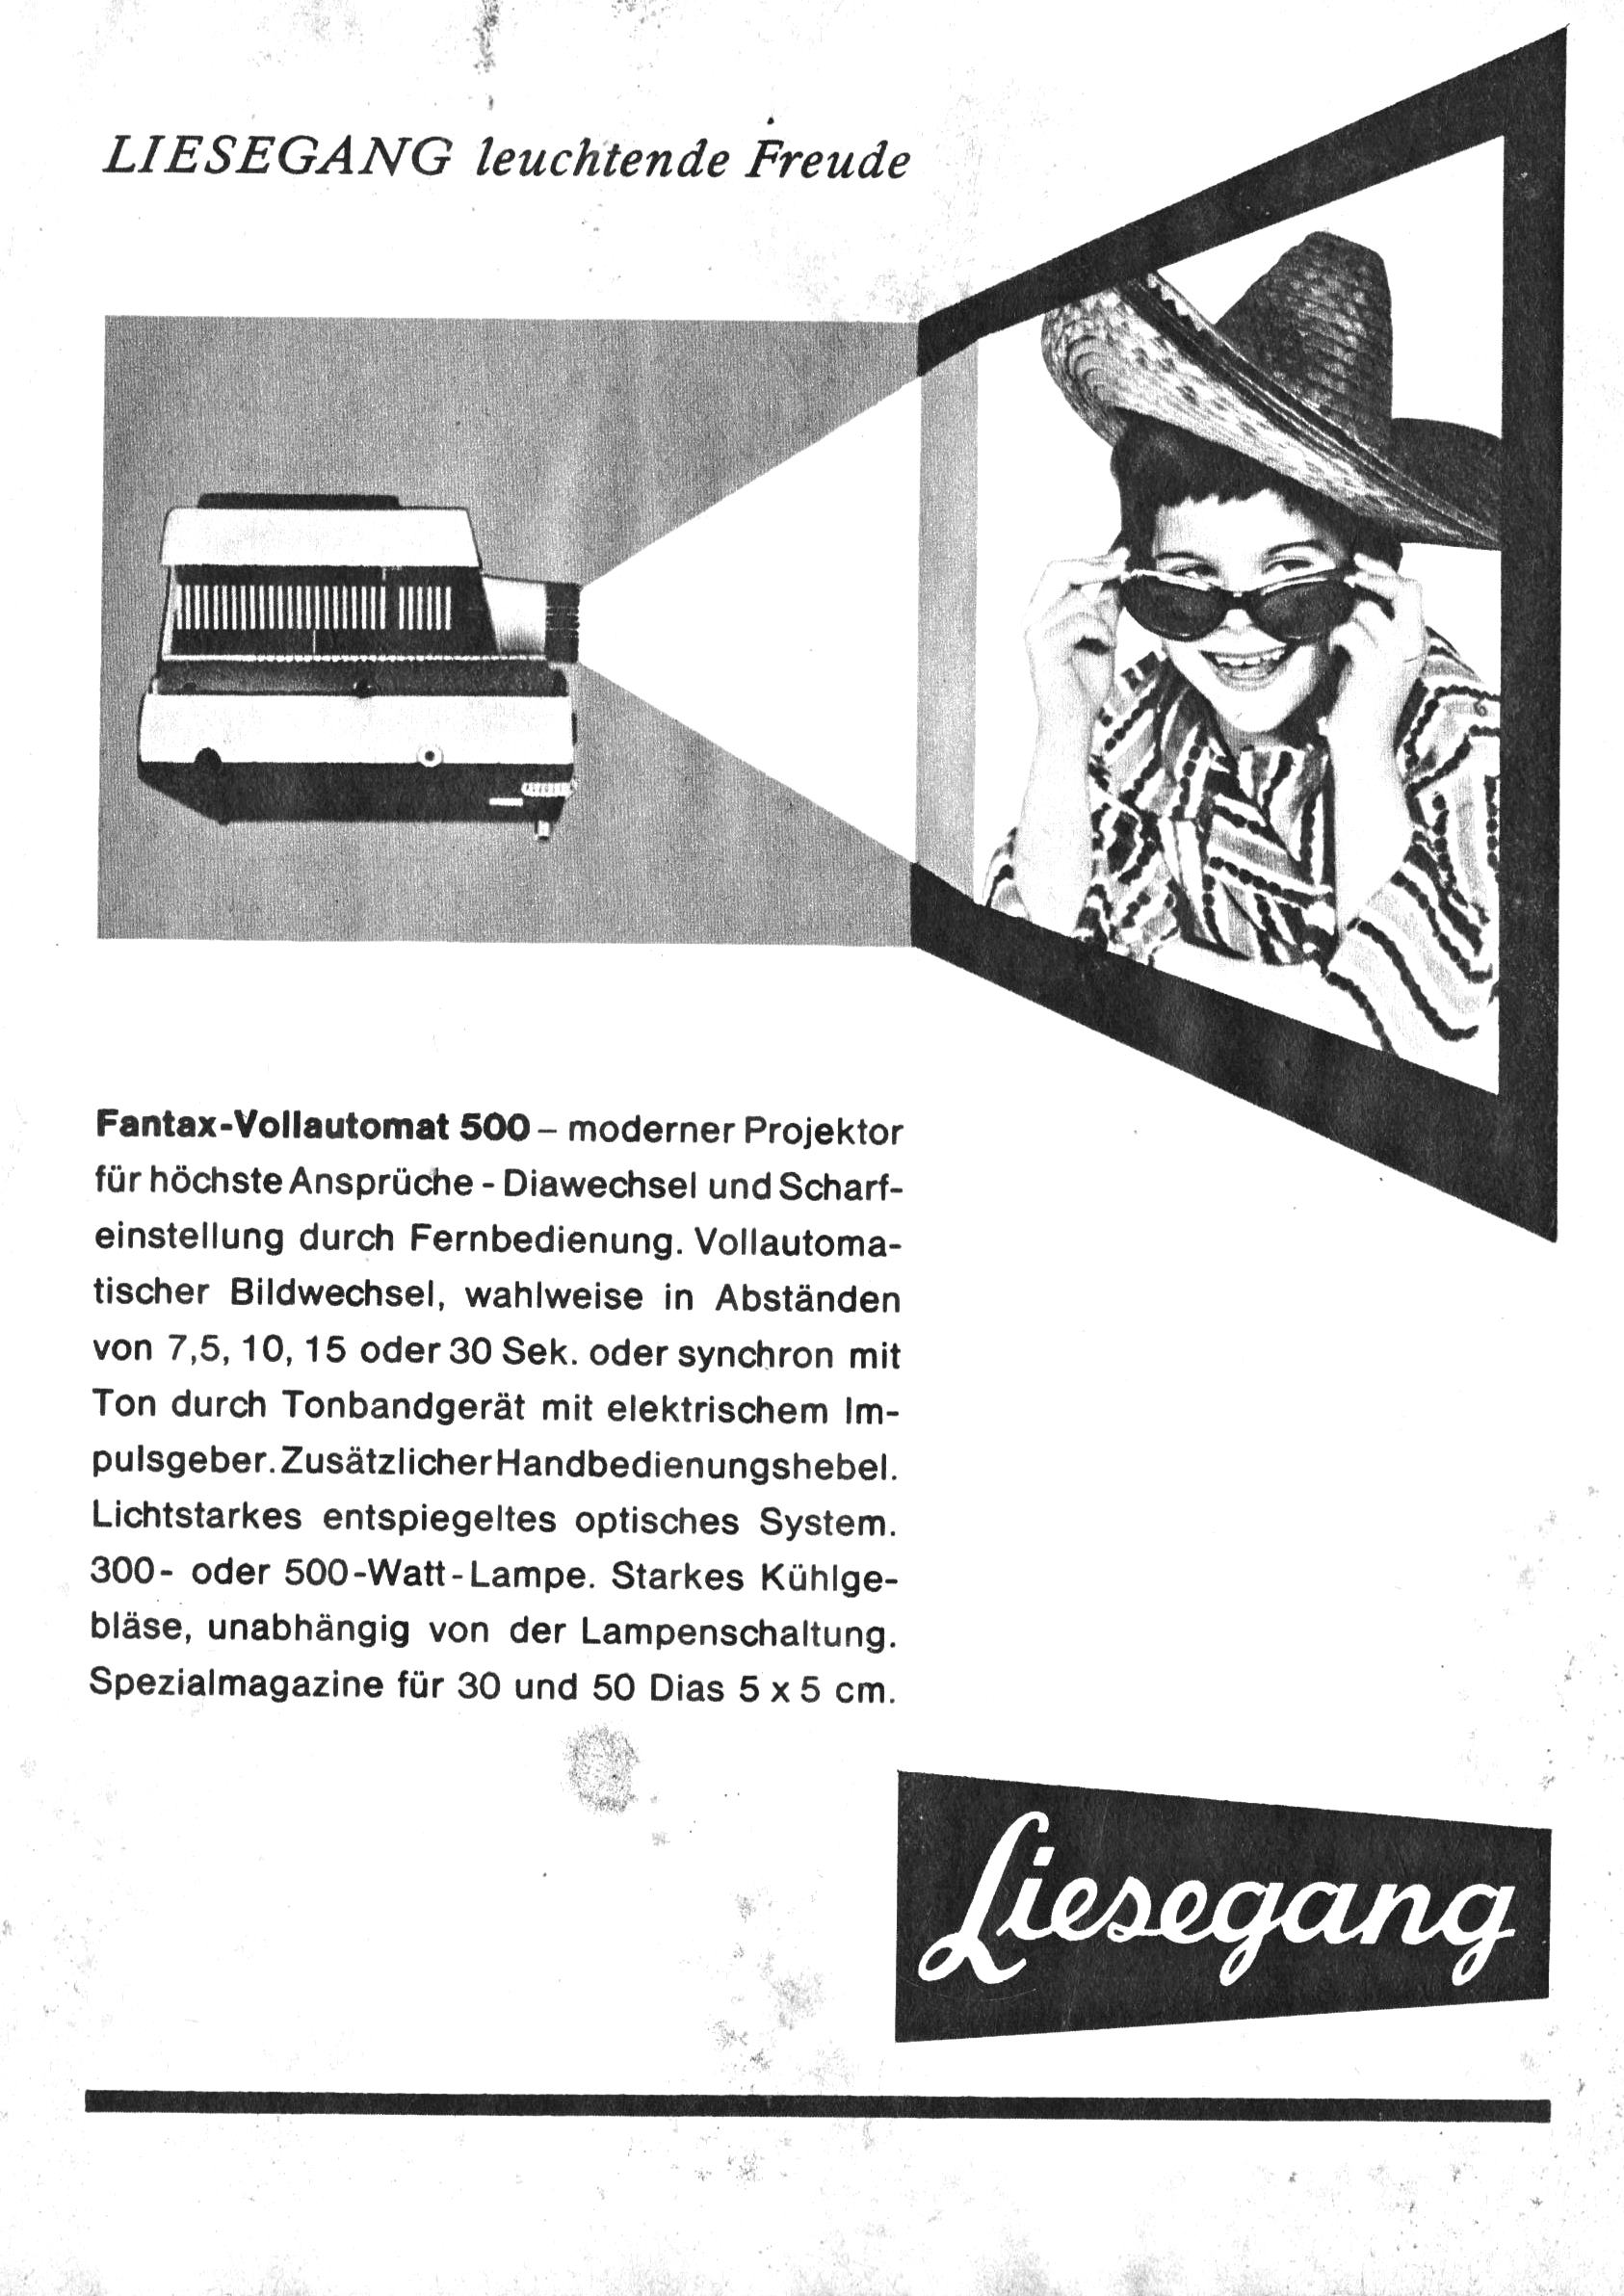 Liesegang 1961 H.jpg